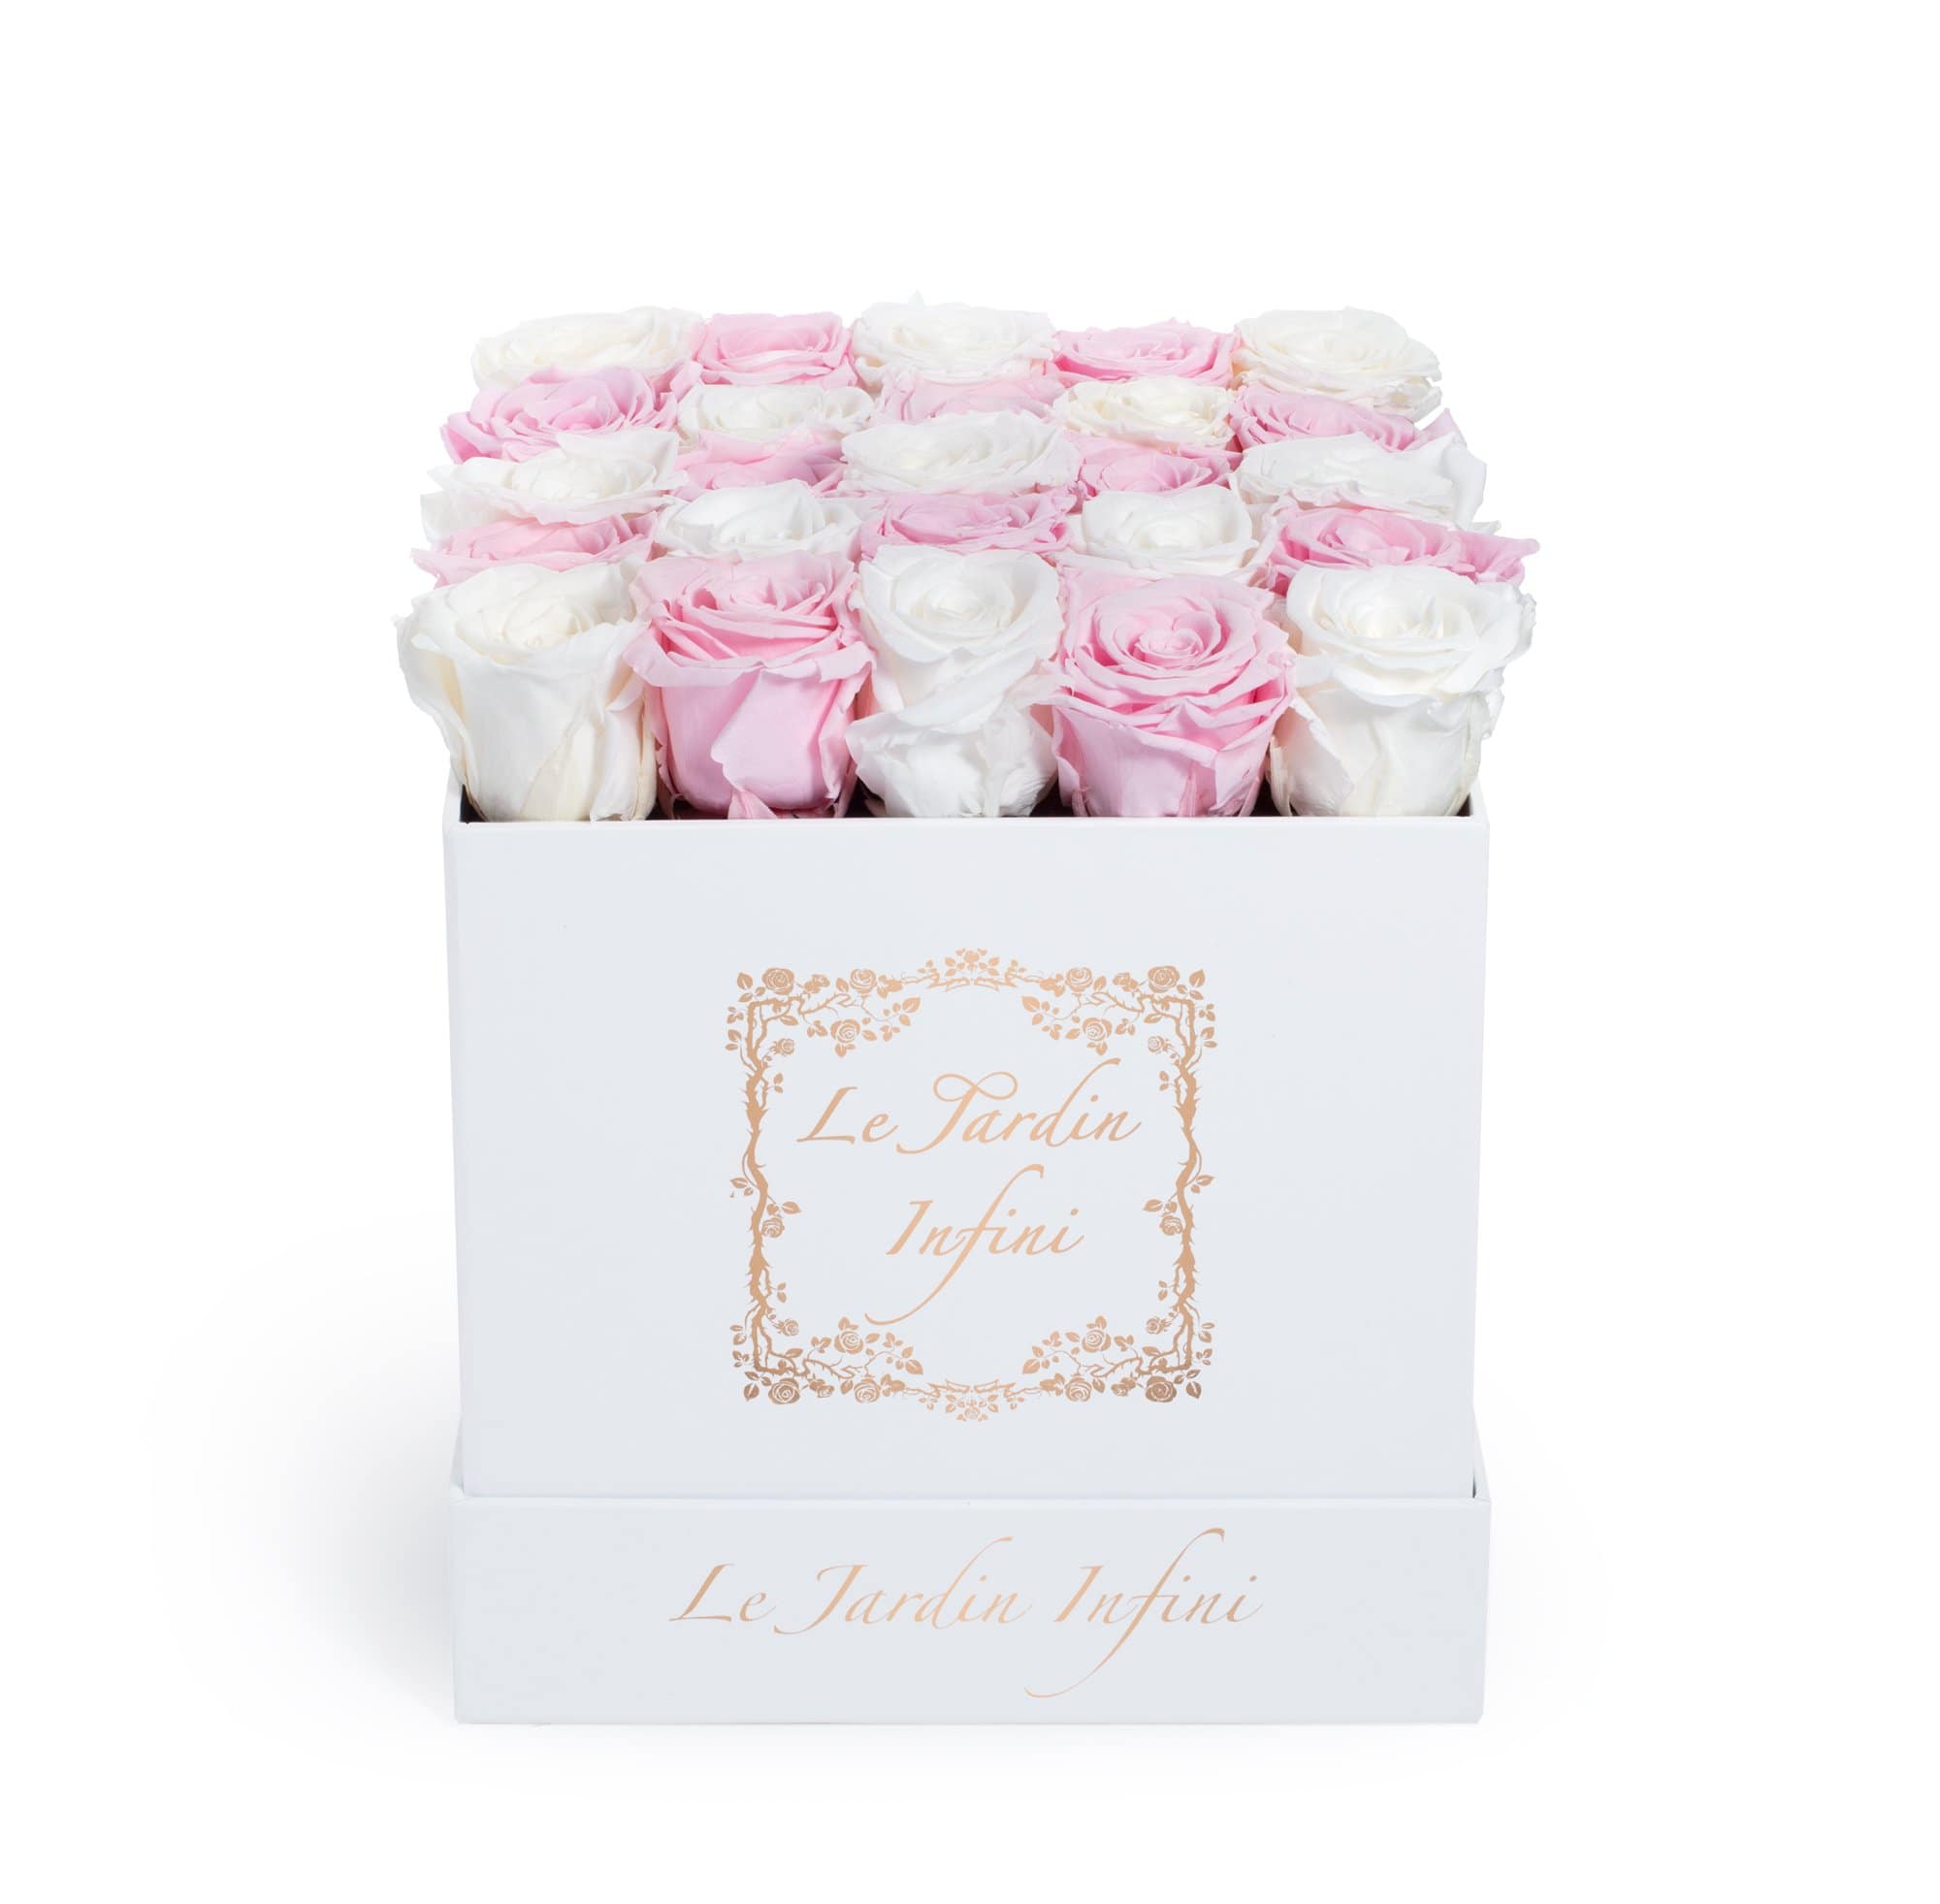 Custom Preserved Roses - Medium Square Box - Le Jardin Infini Roses in a Box